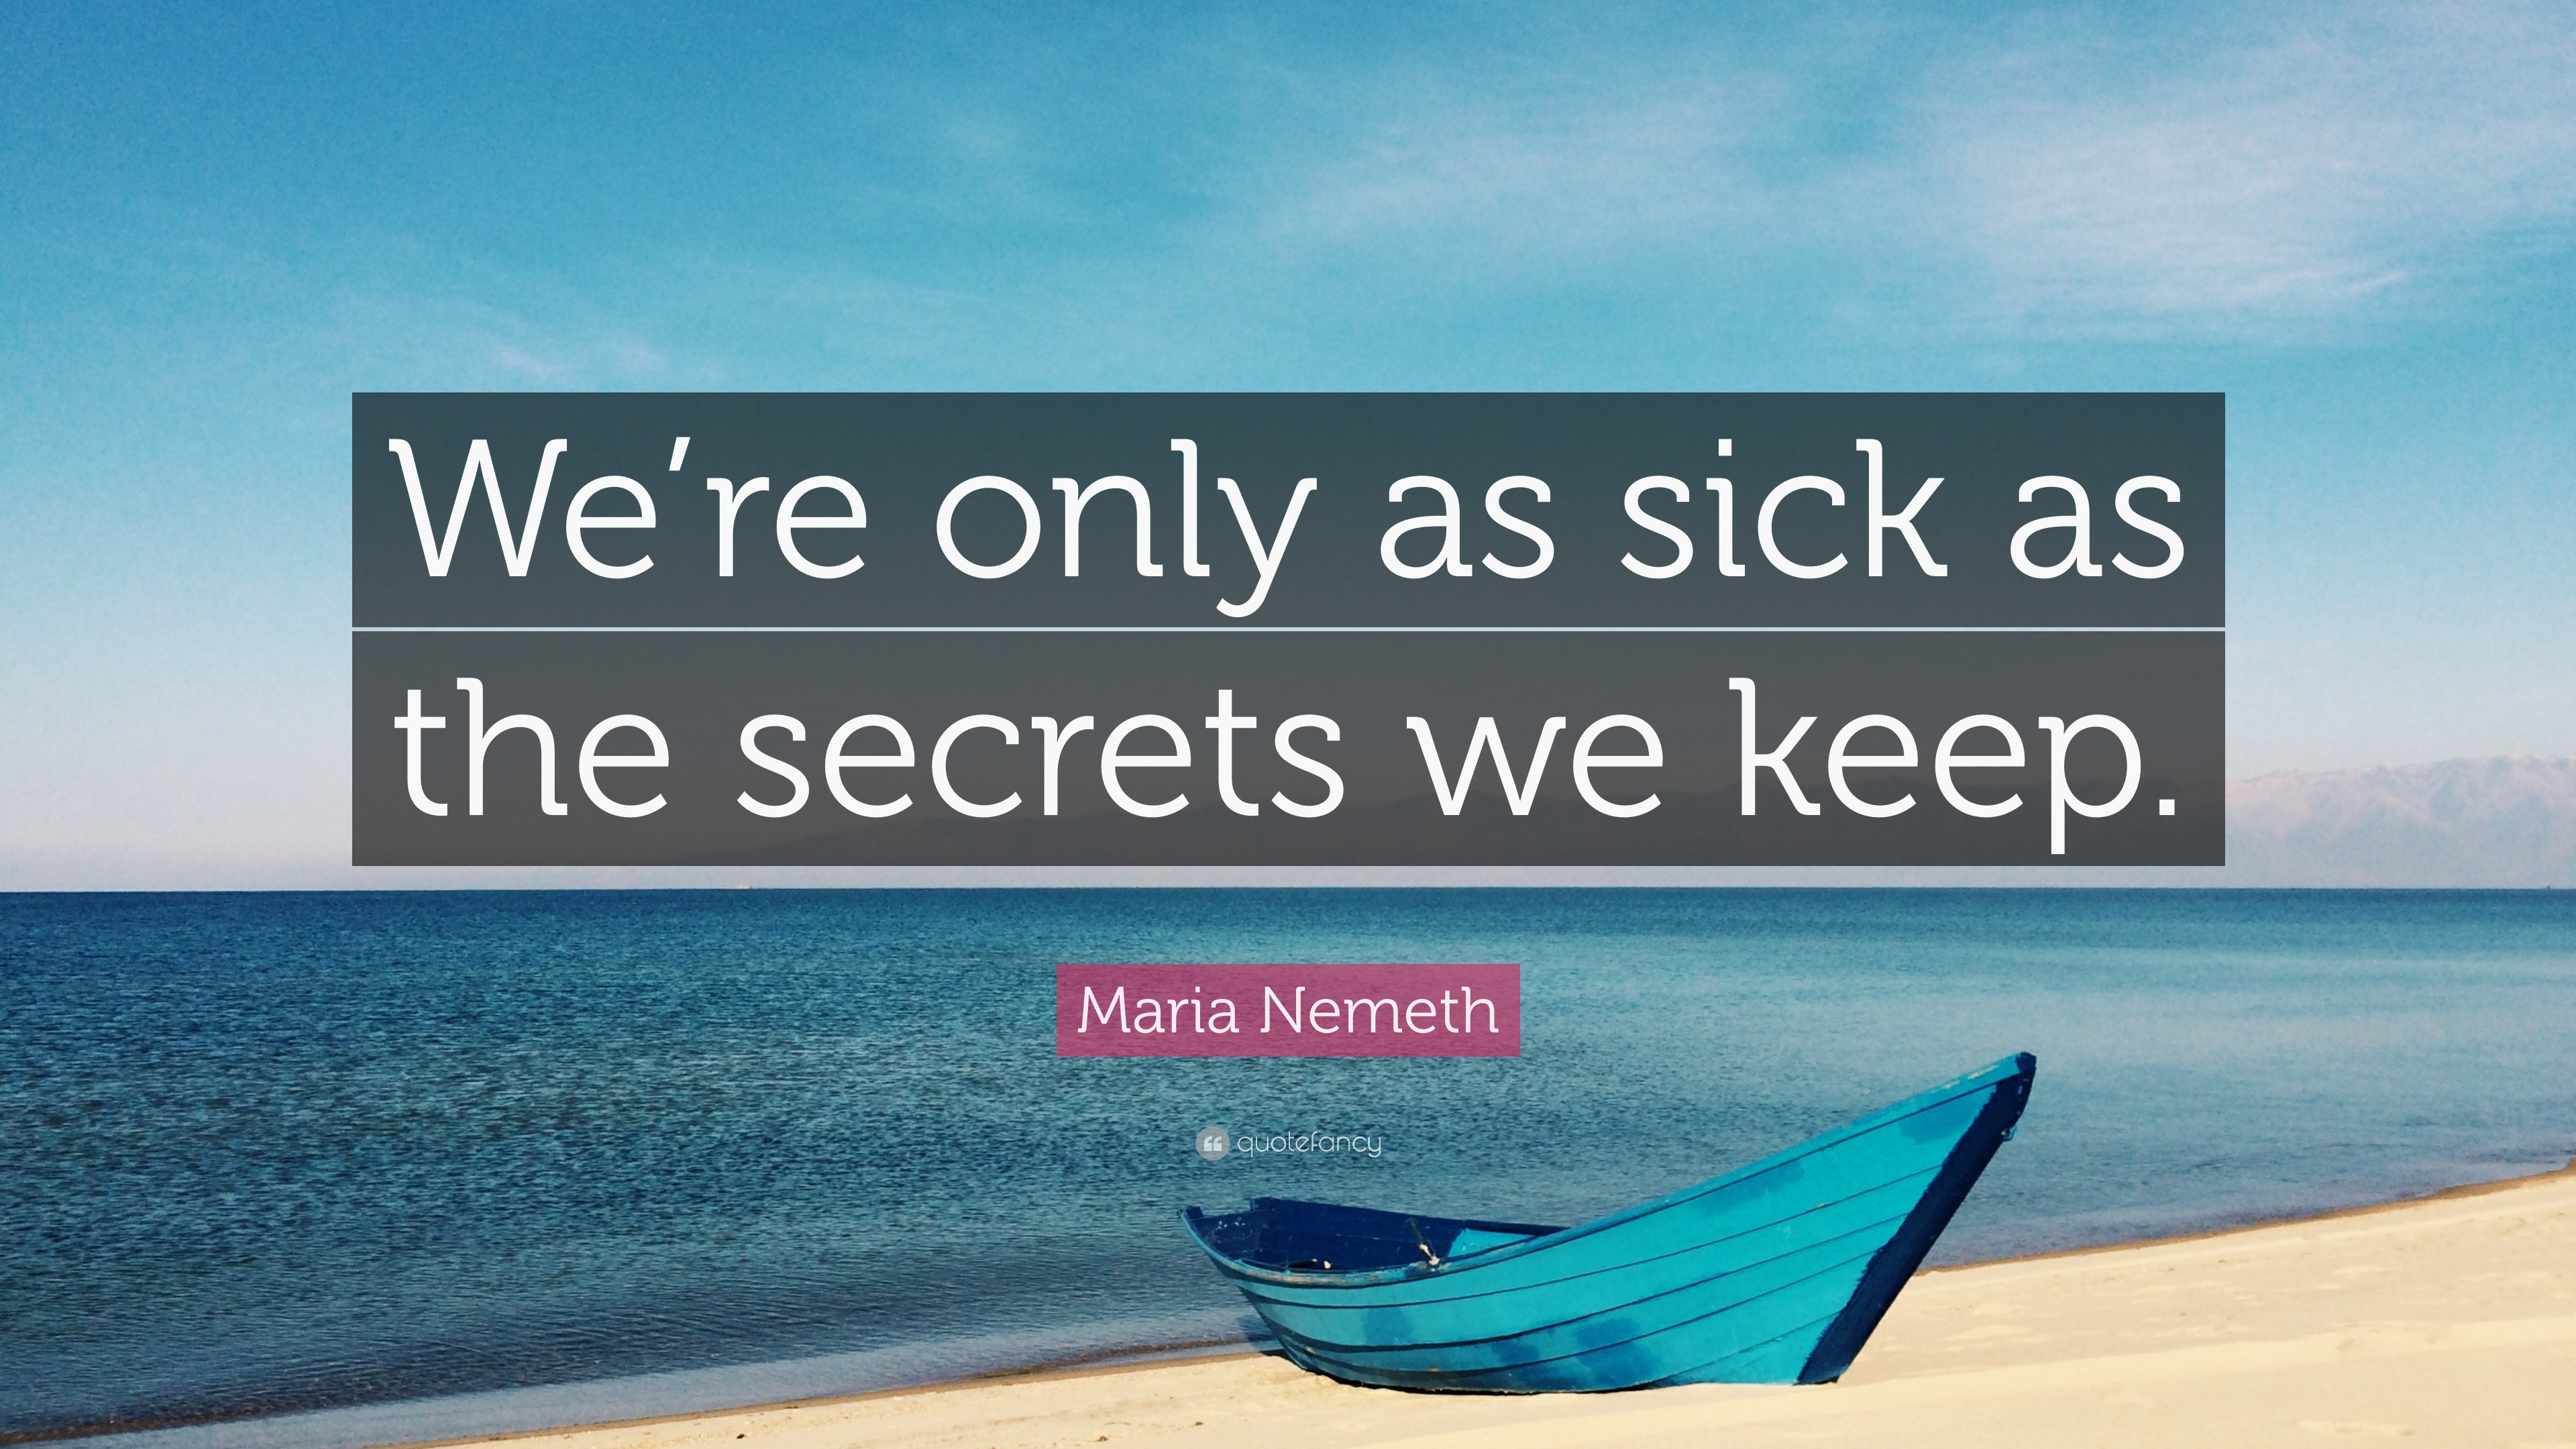 Keeping Secrets Can Make You Sick